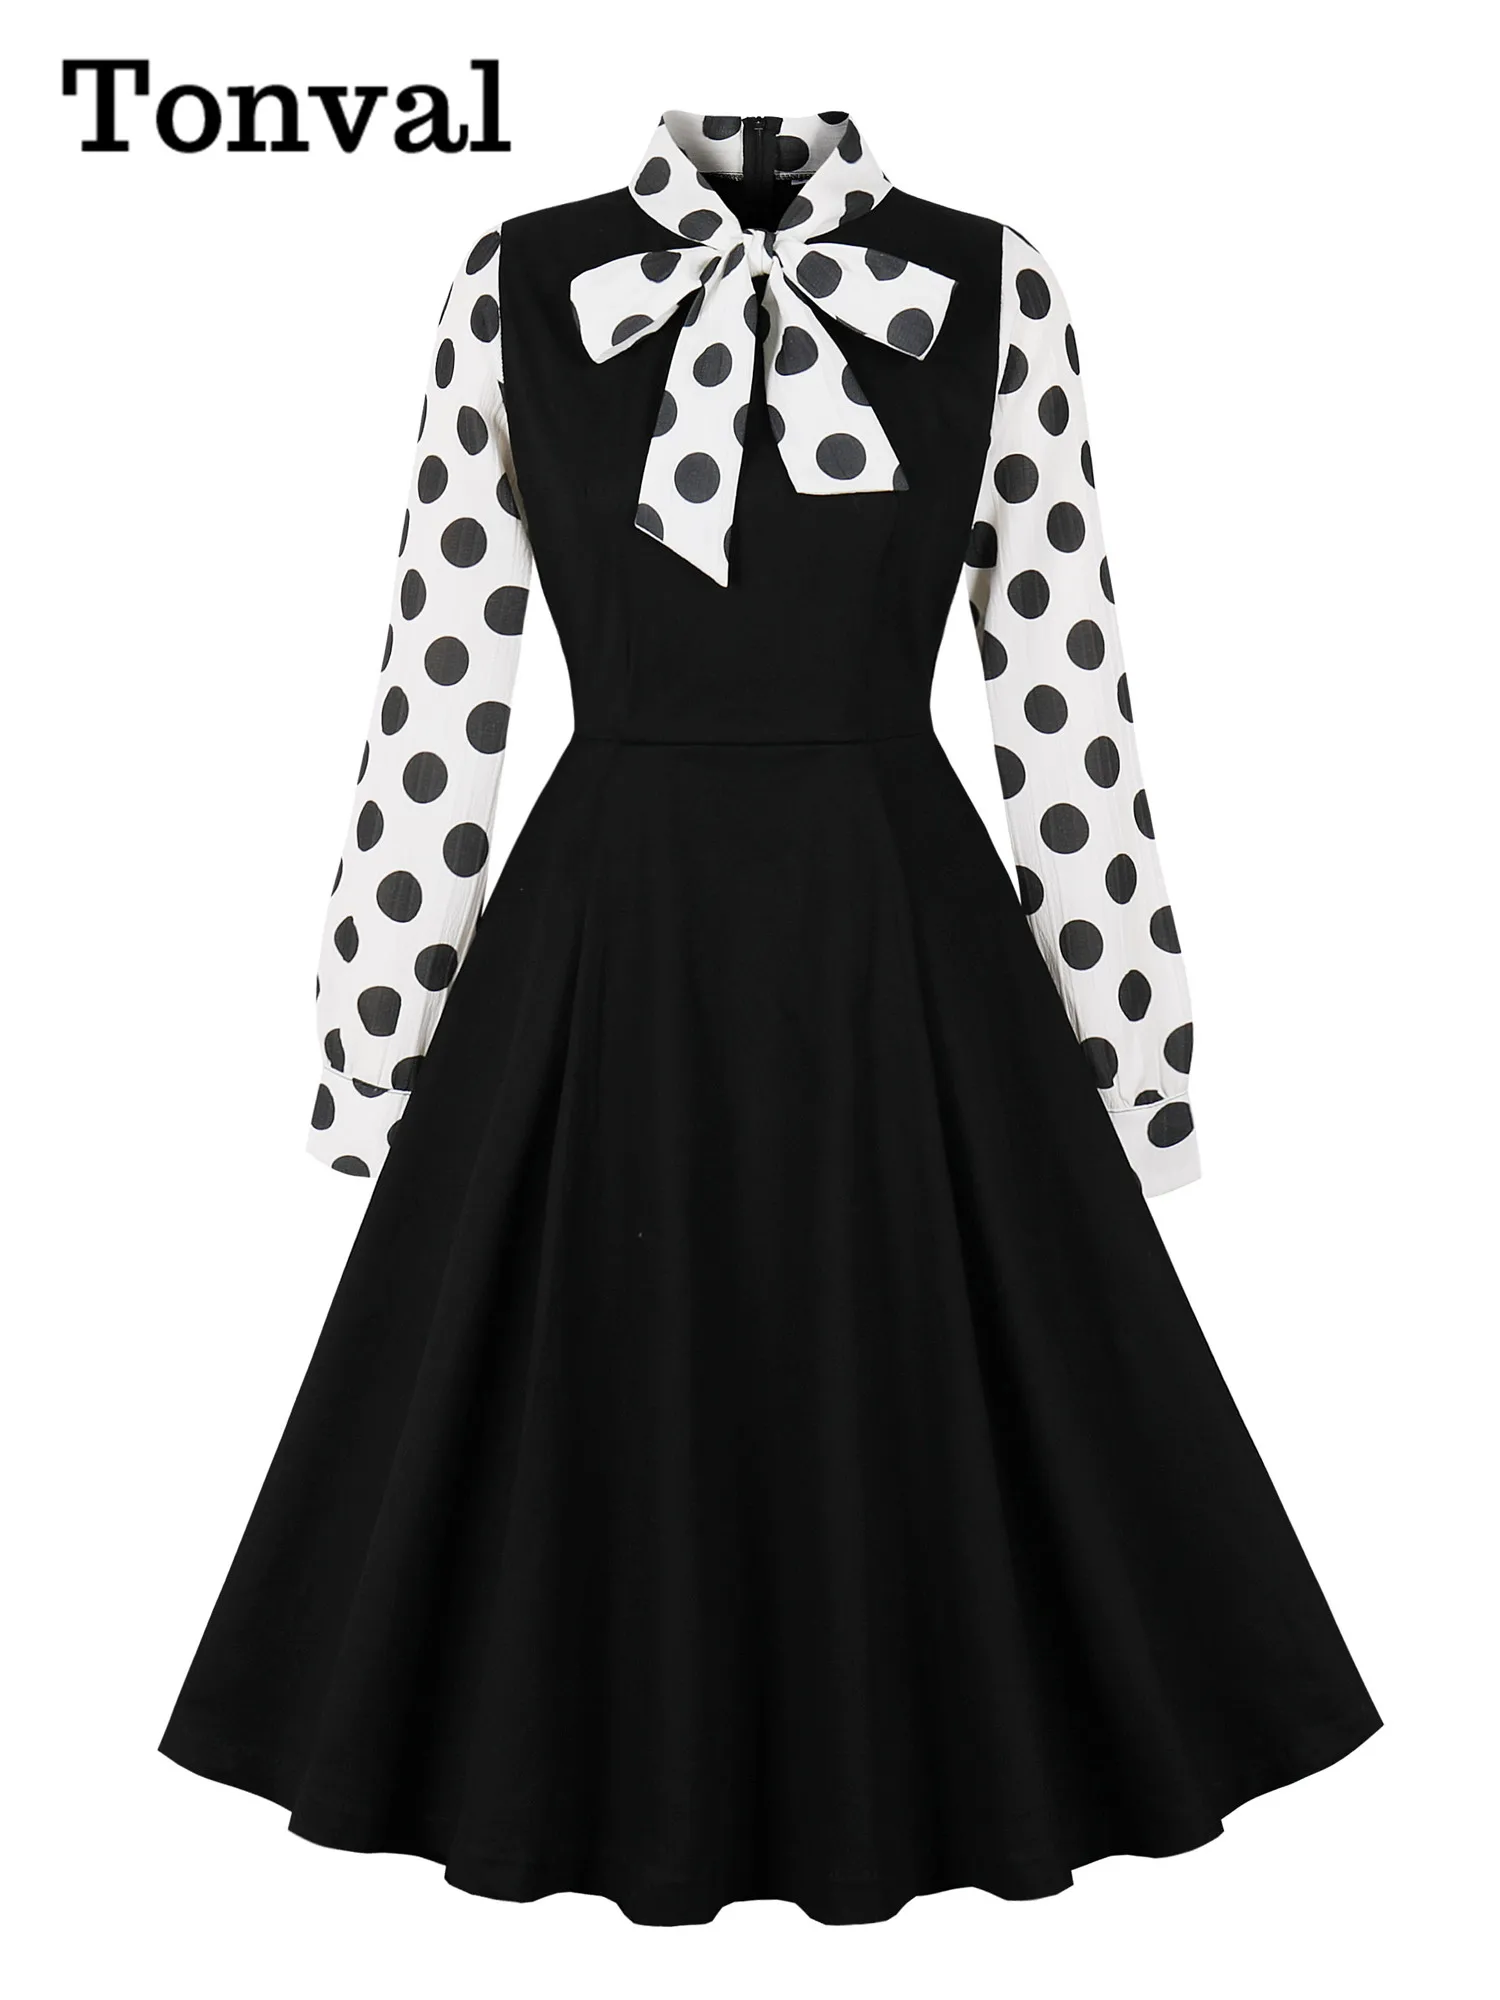 

Tonval Polka Dot Long Sleeve Vintage Dresses for Women Spring Bow Tie Neck 50s Elegant A-Line Black Cotton Dress